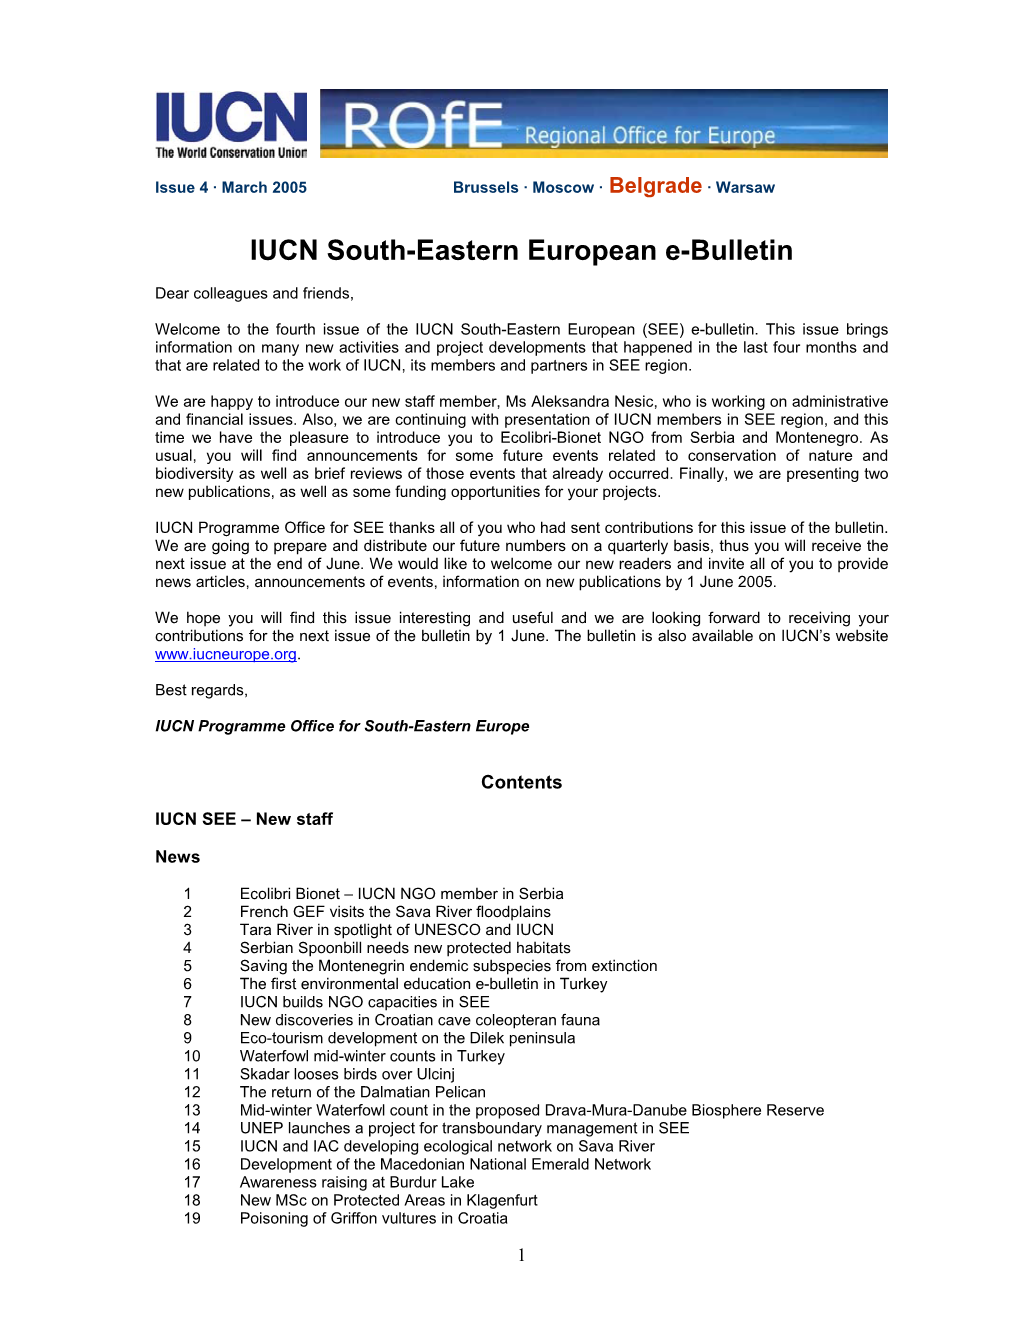 IUCN South-Eastern European E-Bulletin 4